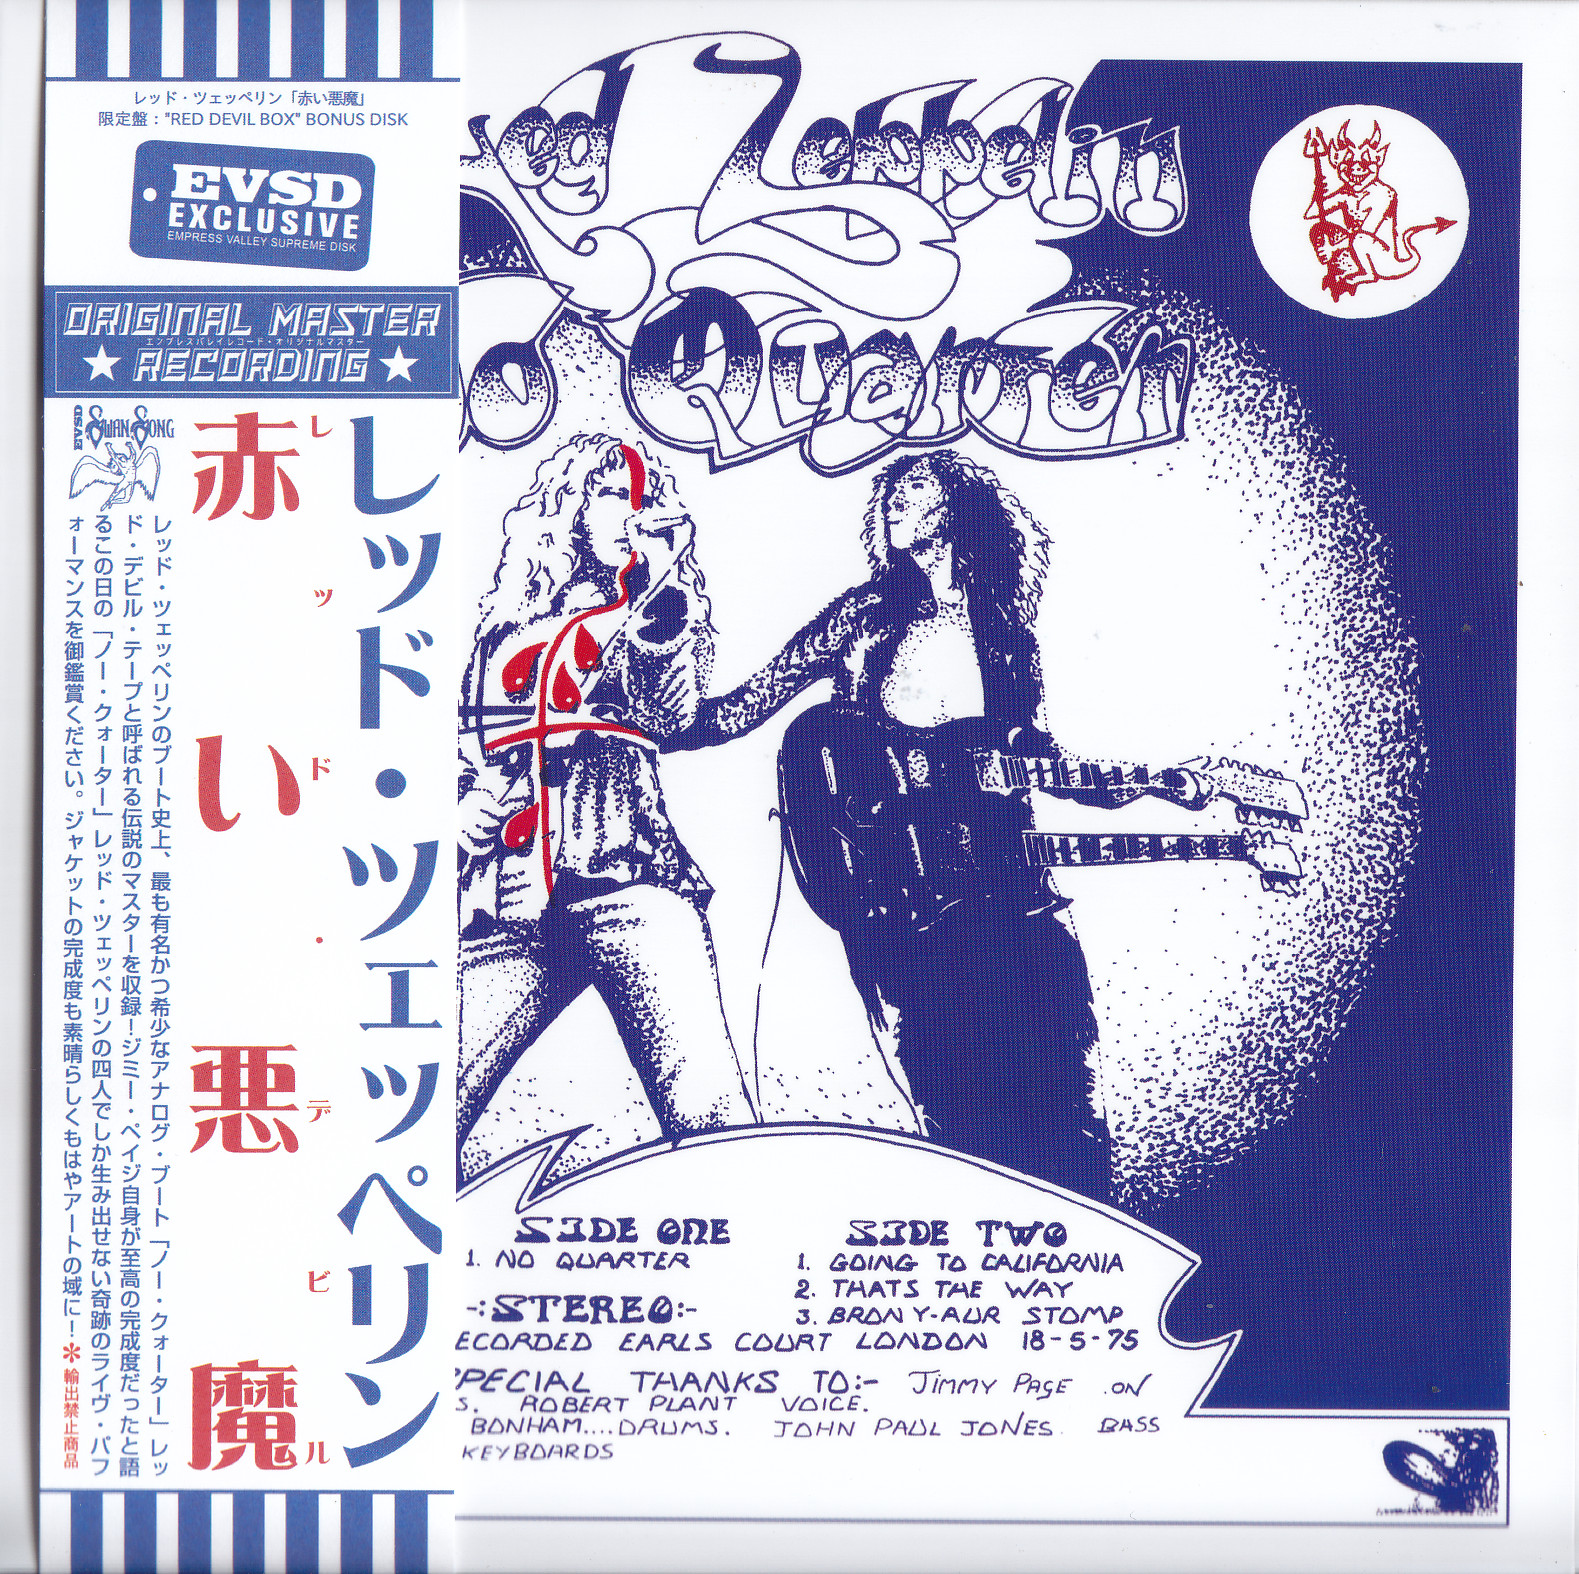 Led Zeppelin / No Quarter Red Devil Special Box / 3CD+2Bonus CD 